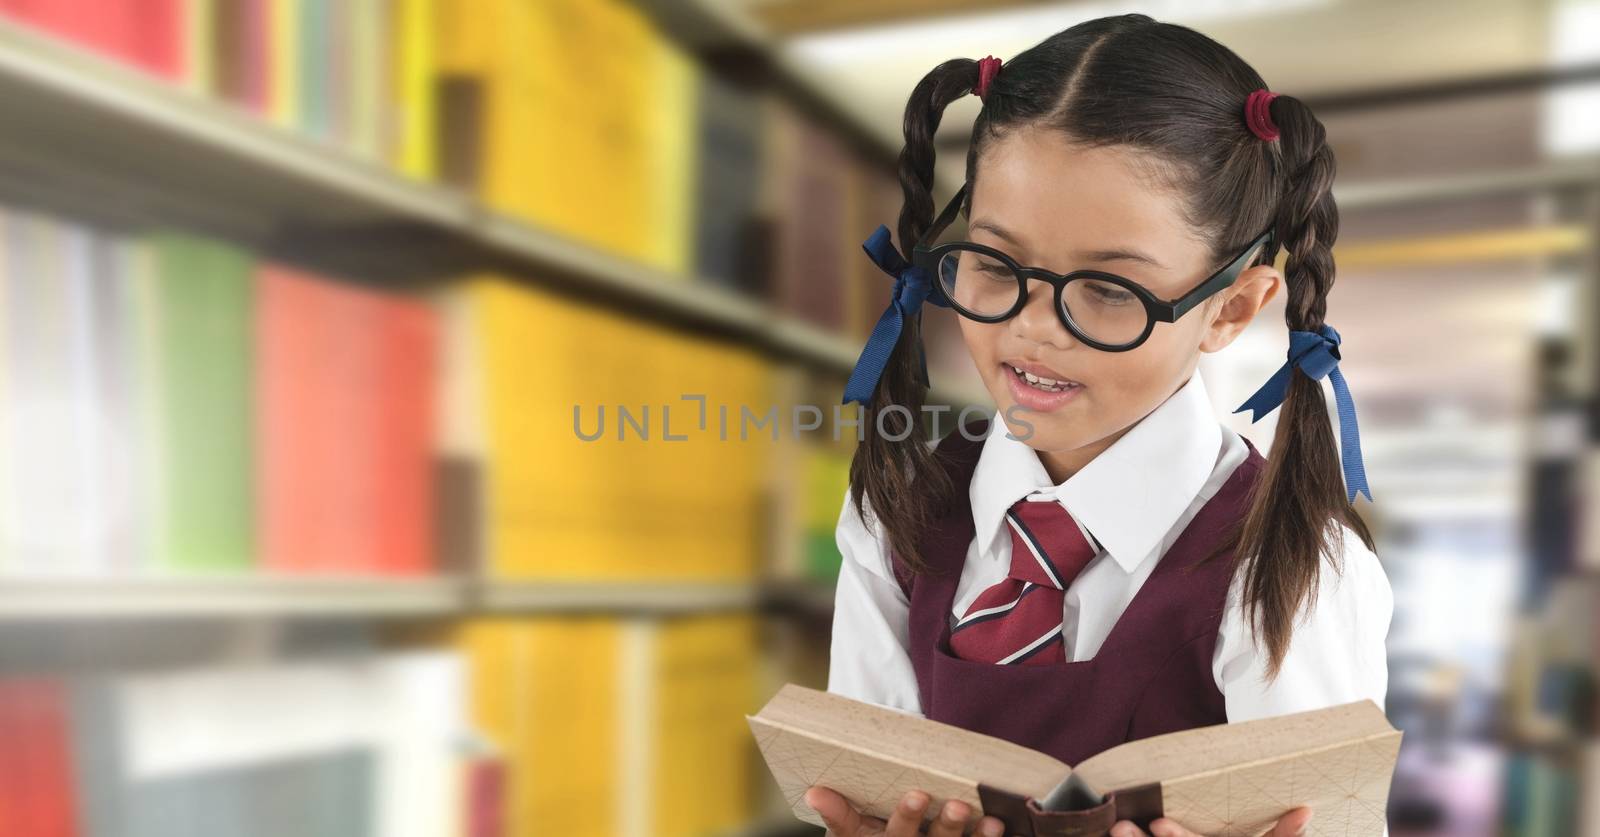 School girl in education library by Wavebreakmedia